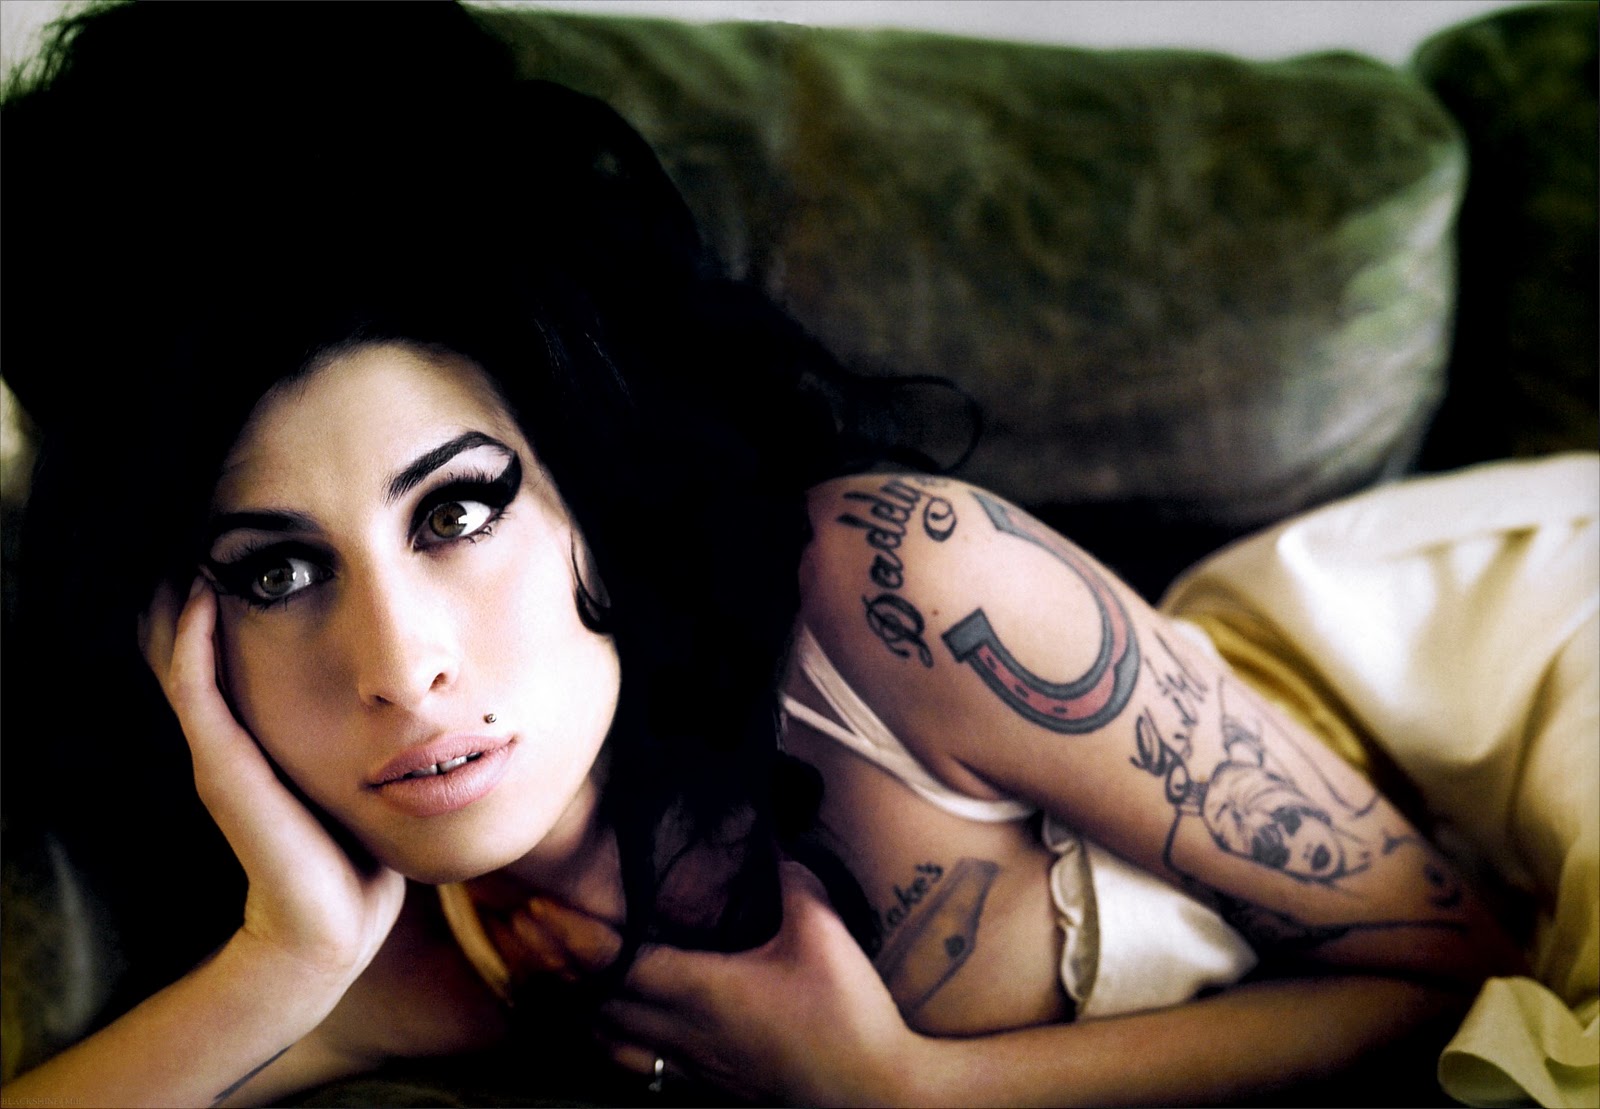 http://4.bp.blogspot.com/-zbuNwO9cml0/TrLMZDpqmtI/AAAAAAAAAQc/v-cm7PysVXw/s1600/Amy-Winehouse-Morre-Foto-Sensual-Nua.jpg